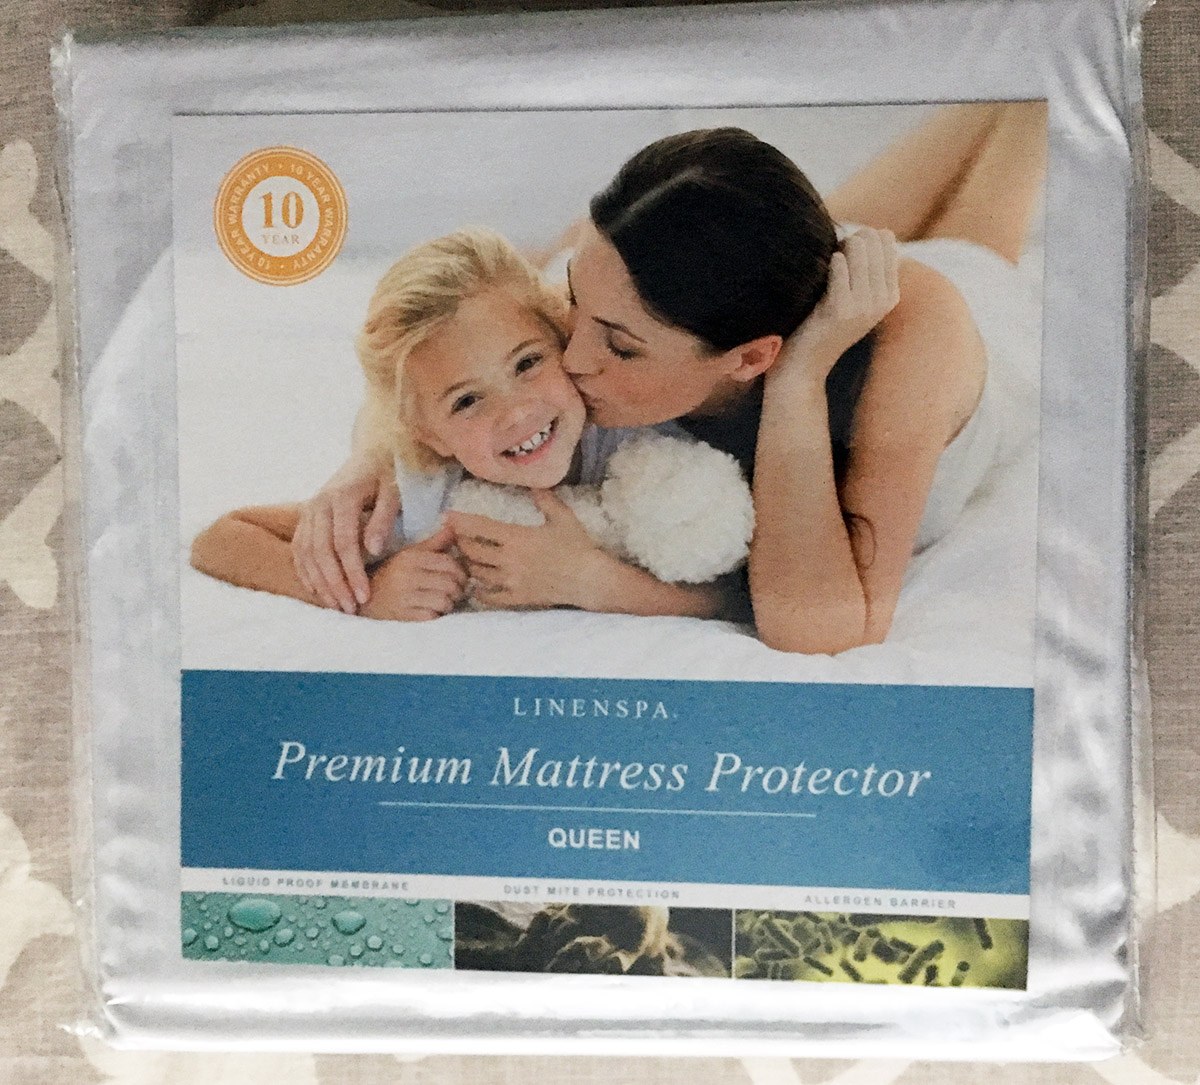 Linenspa Premium Mattress Protector Review